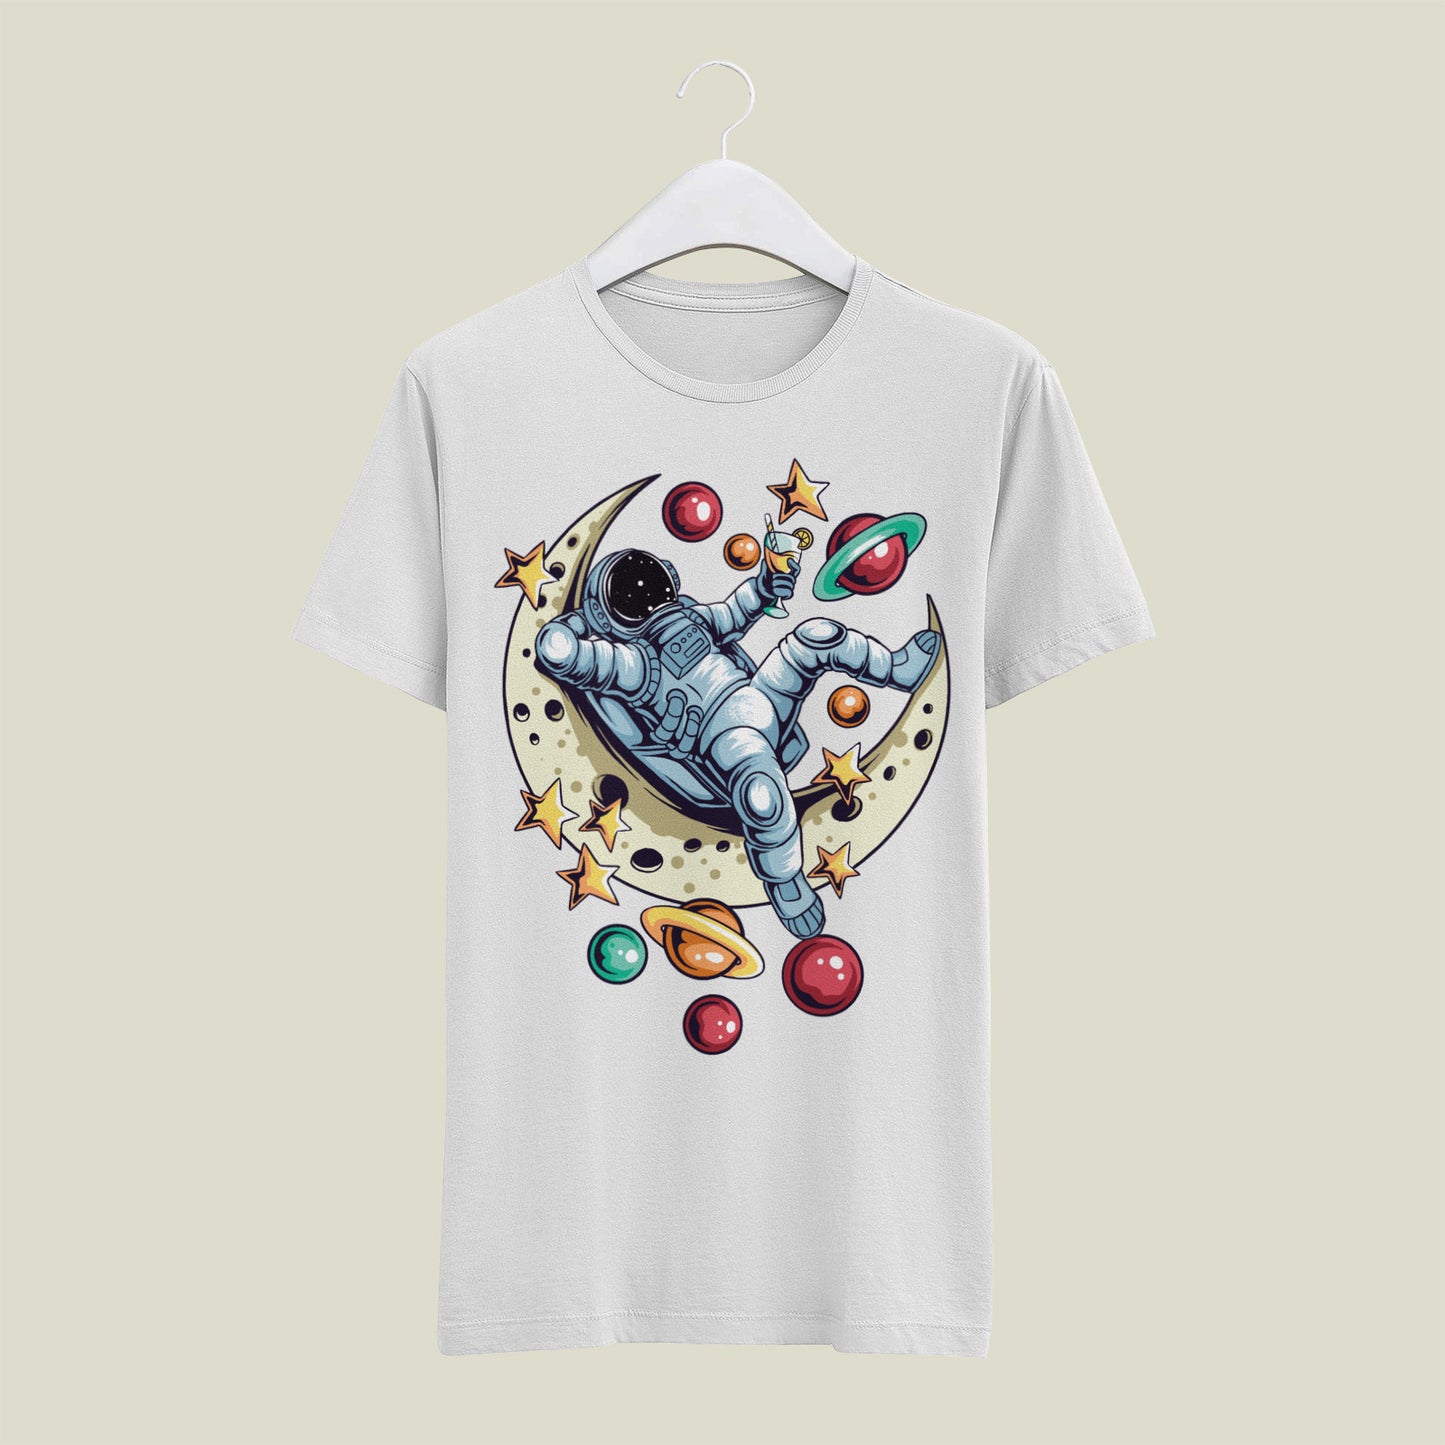 Astronaut Sleeping on Moon T-shirt